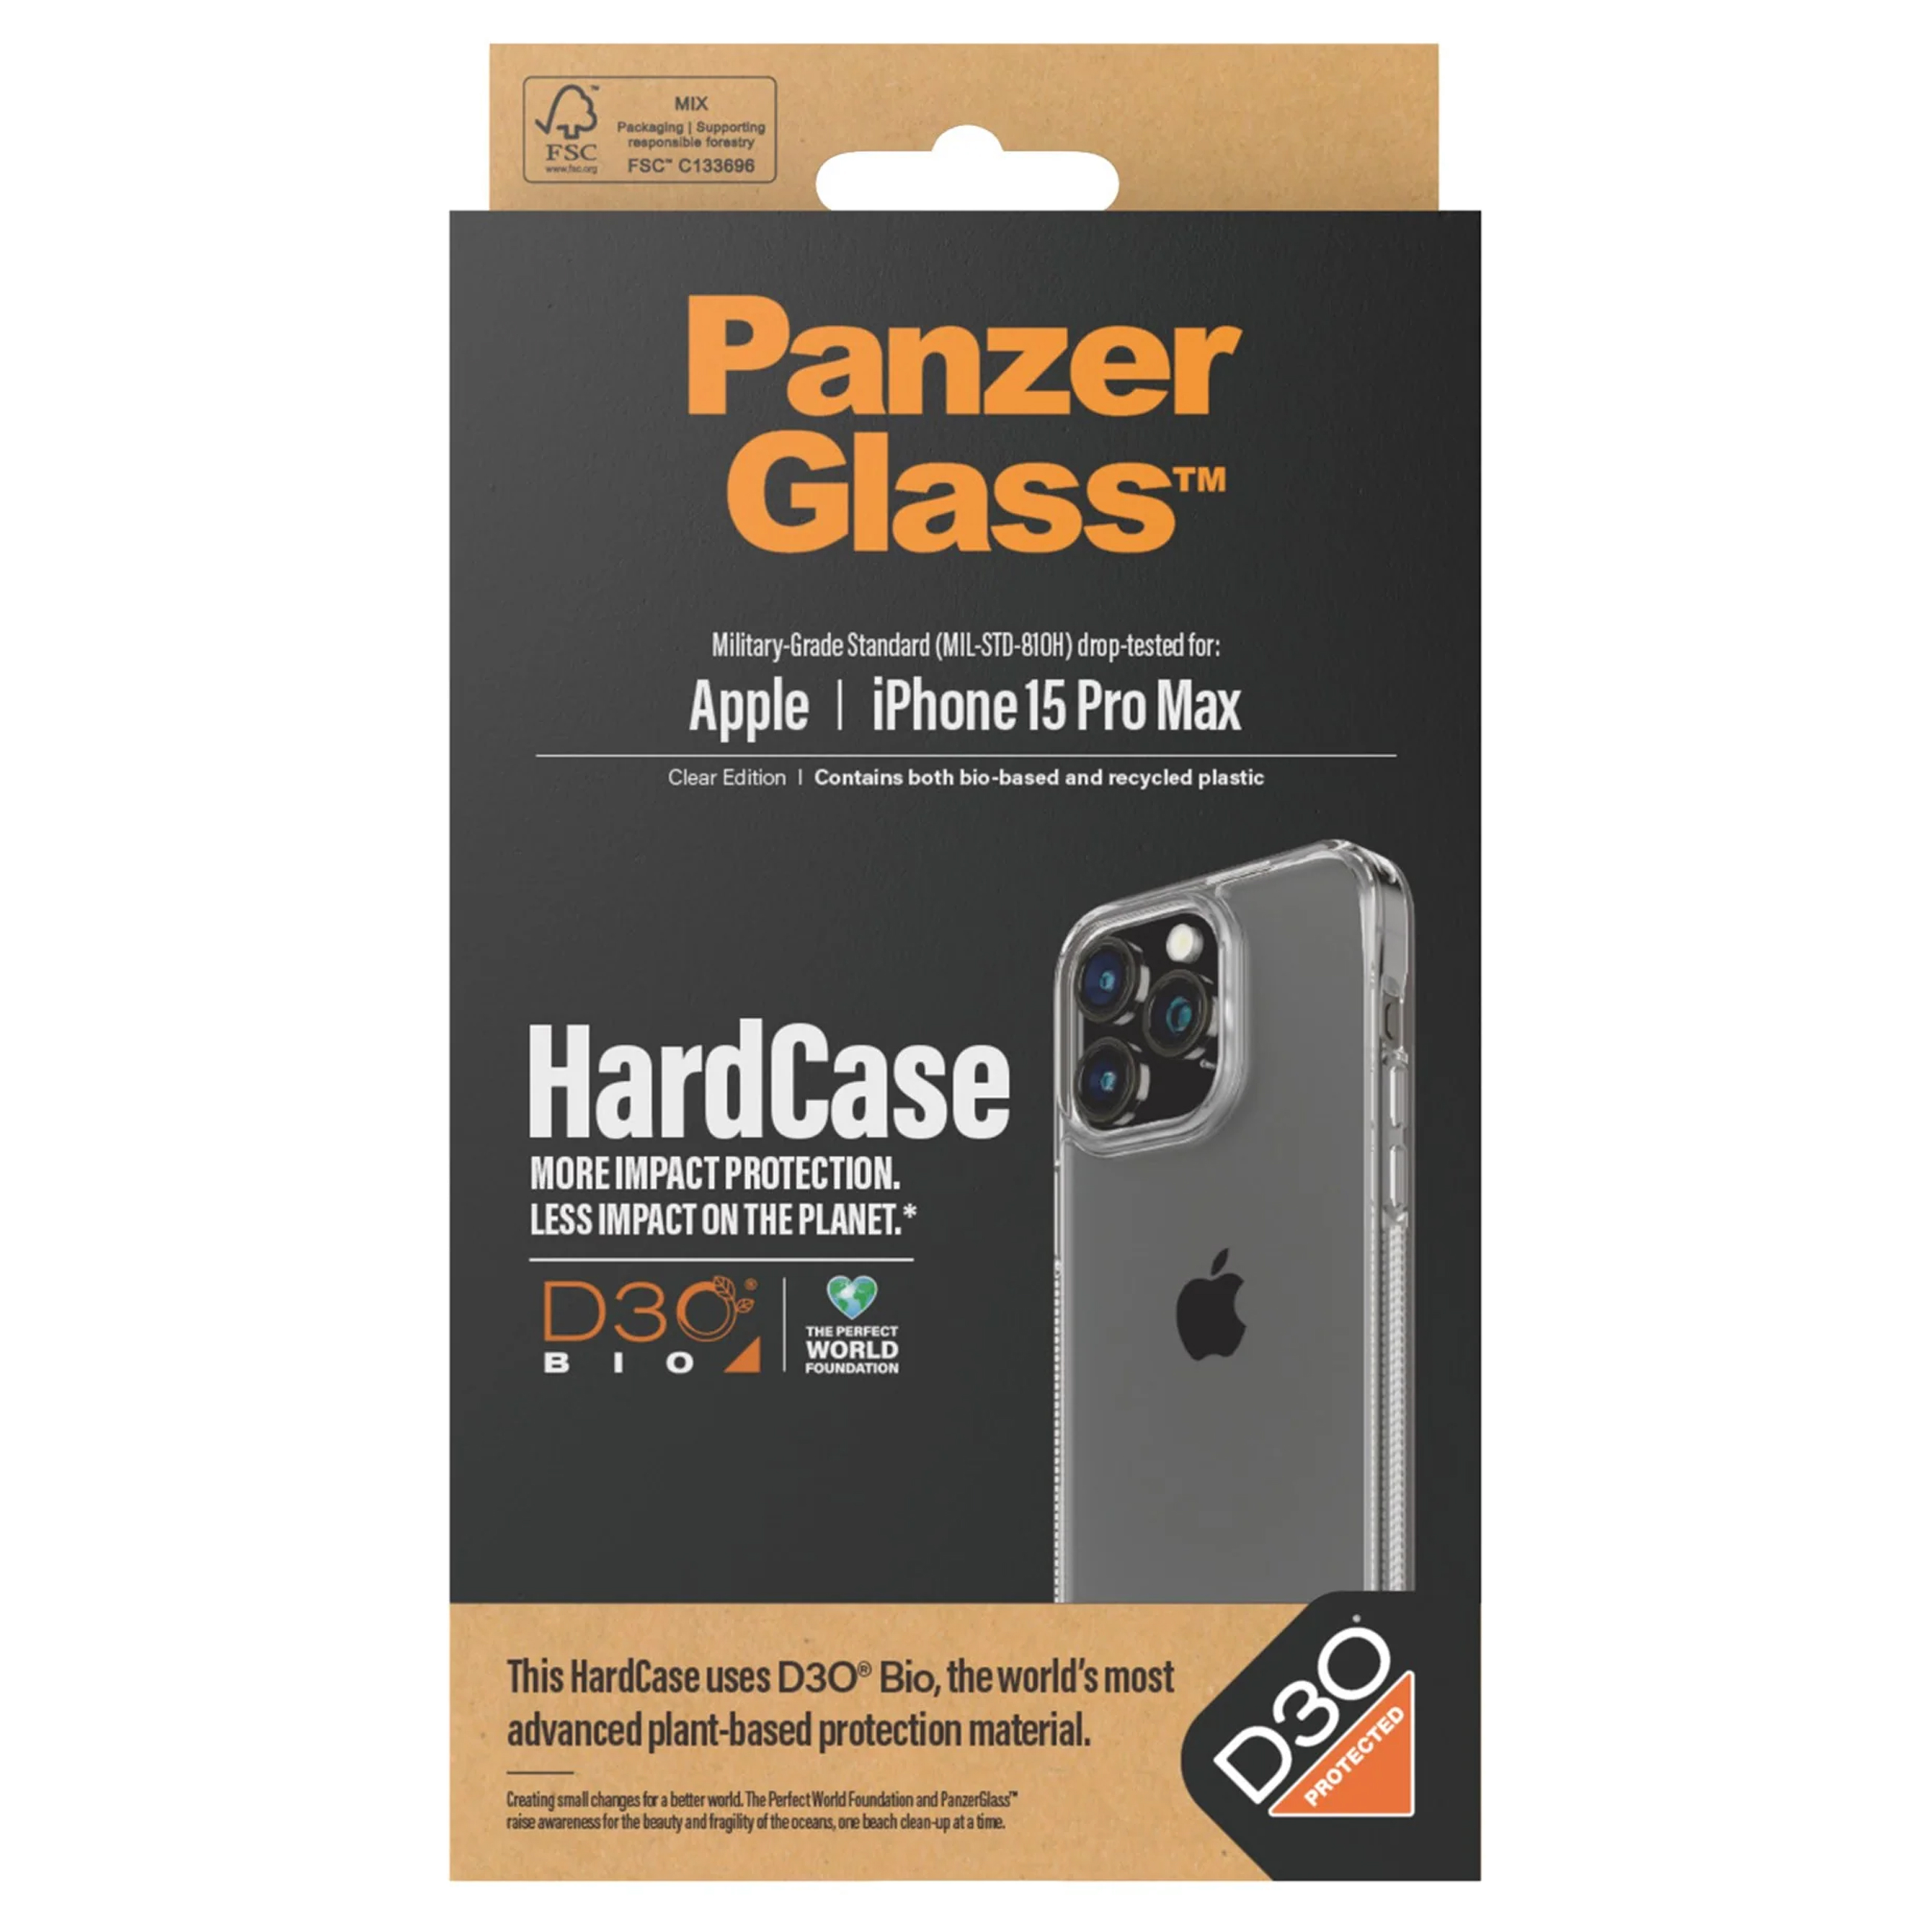 PANZERGLASS Hardcase Hülle mit D3O - Smartphone Schutzhülle - Transparent - Neu